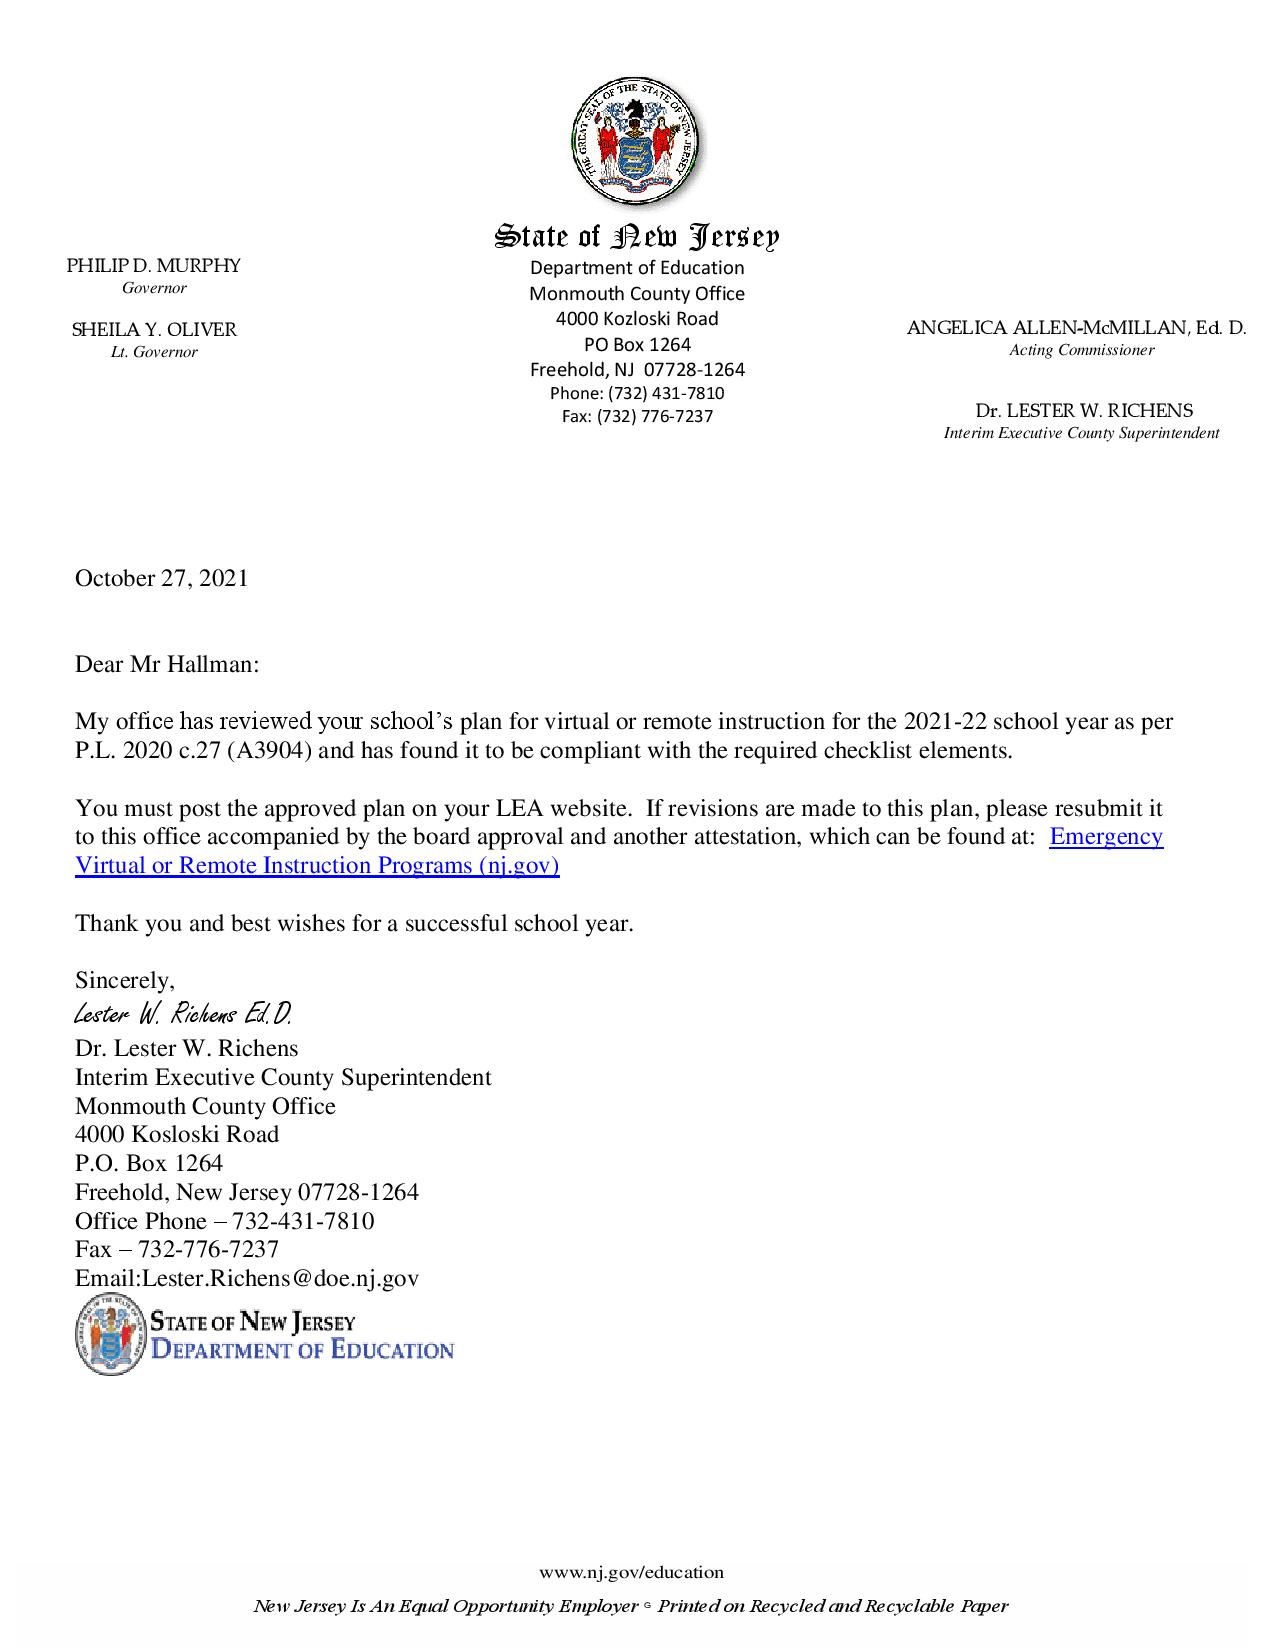 Remote Instructional Plan Approval Letter Belmar School District